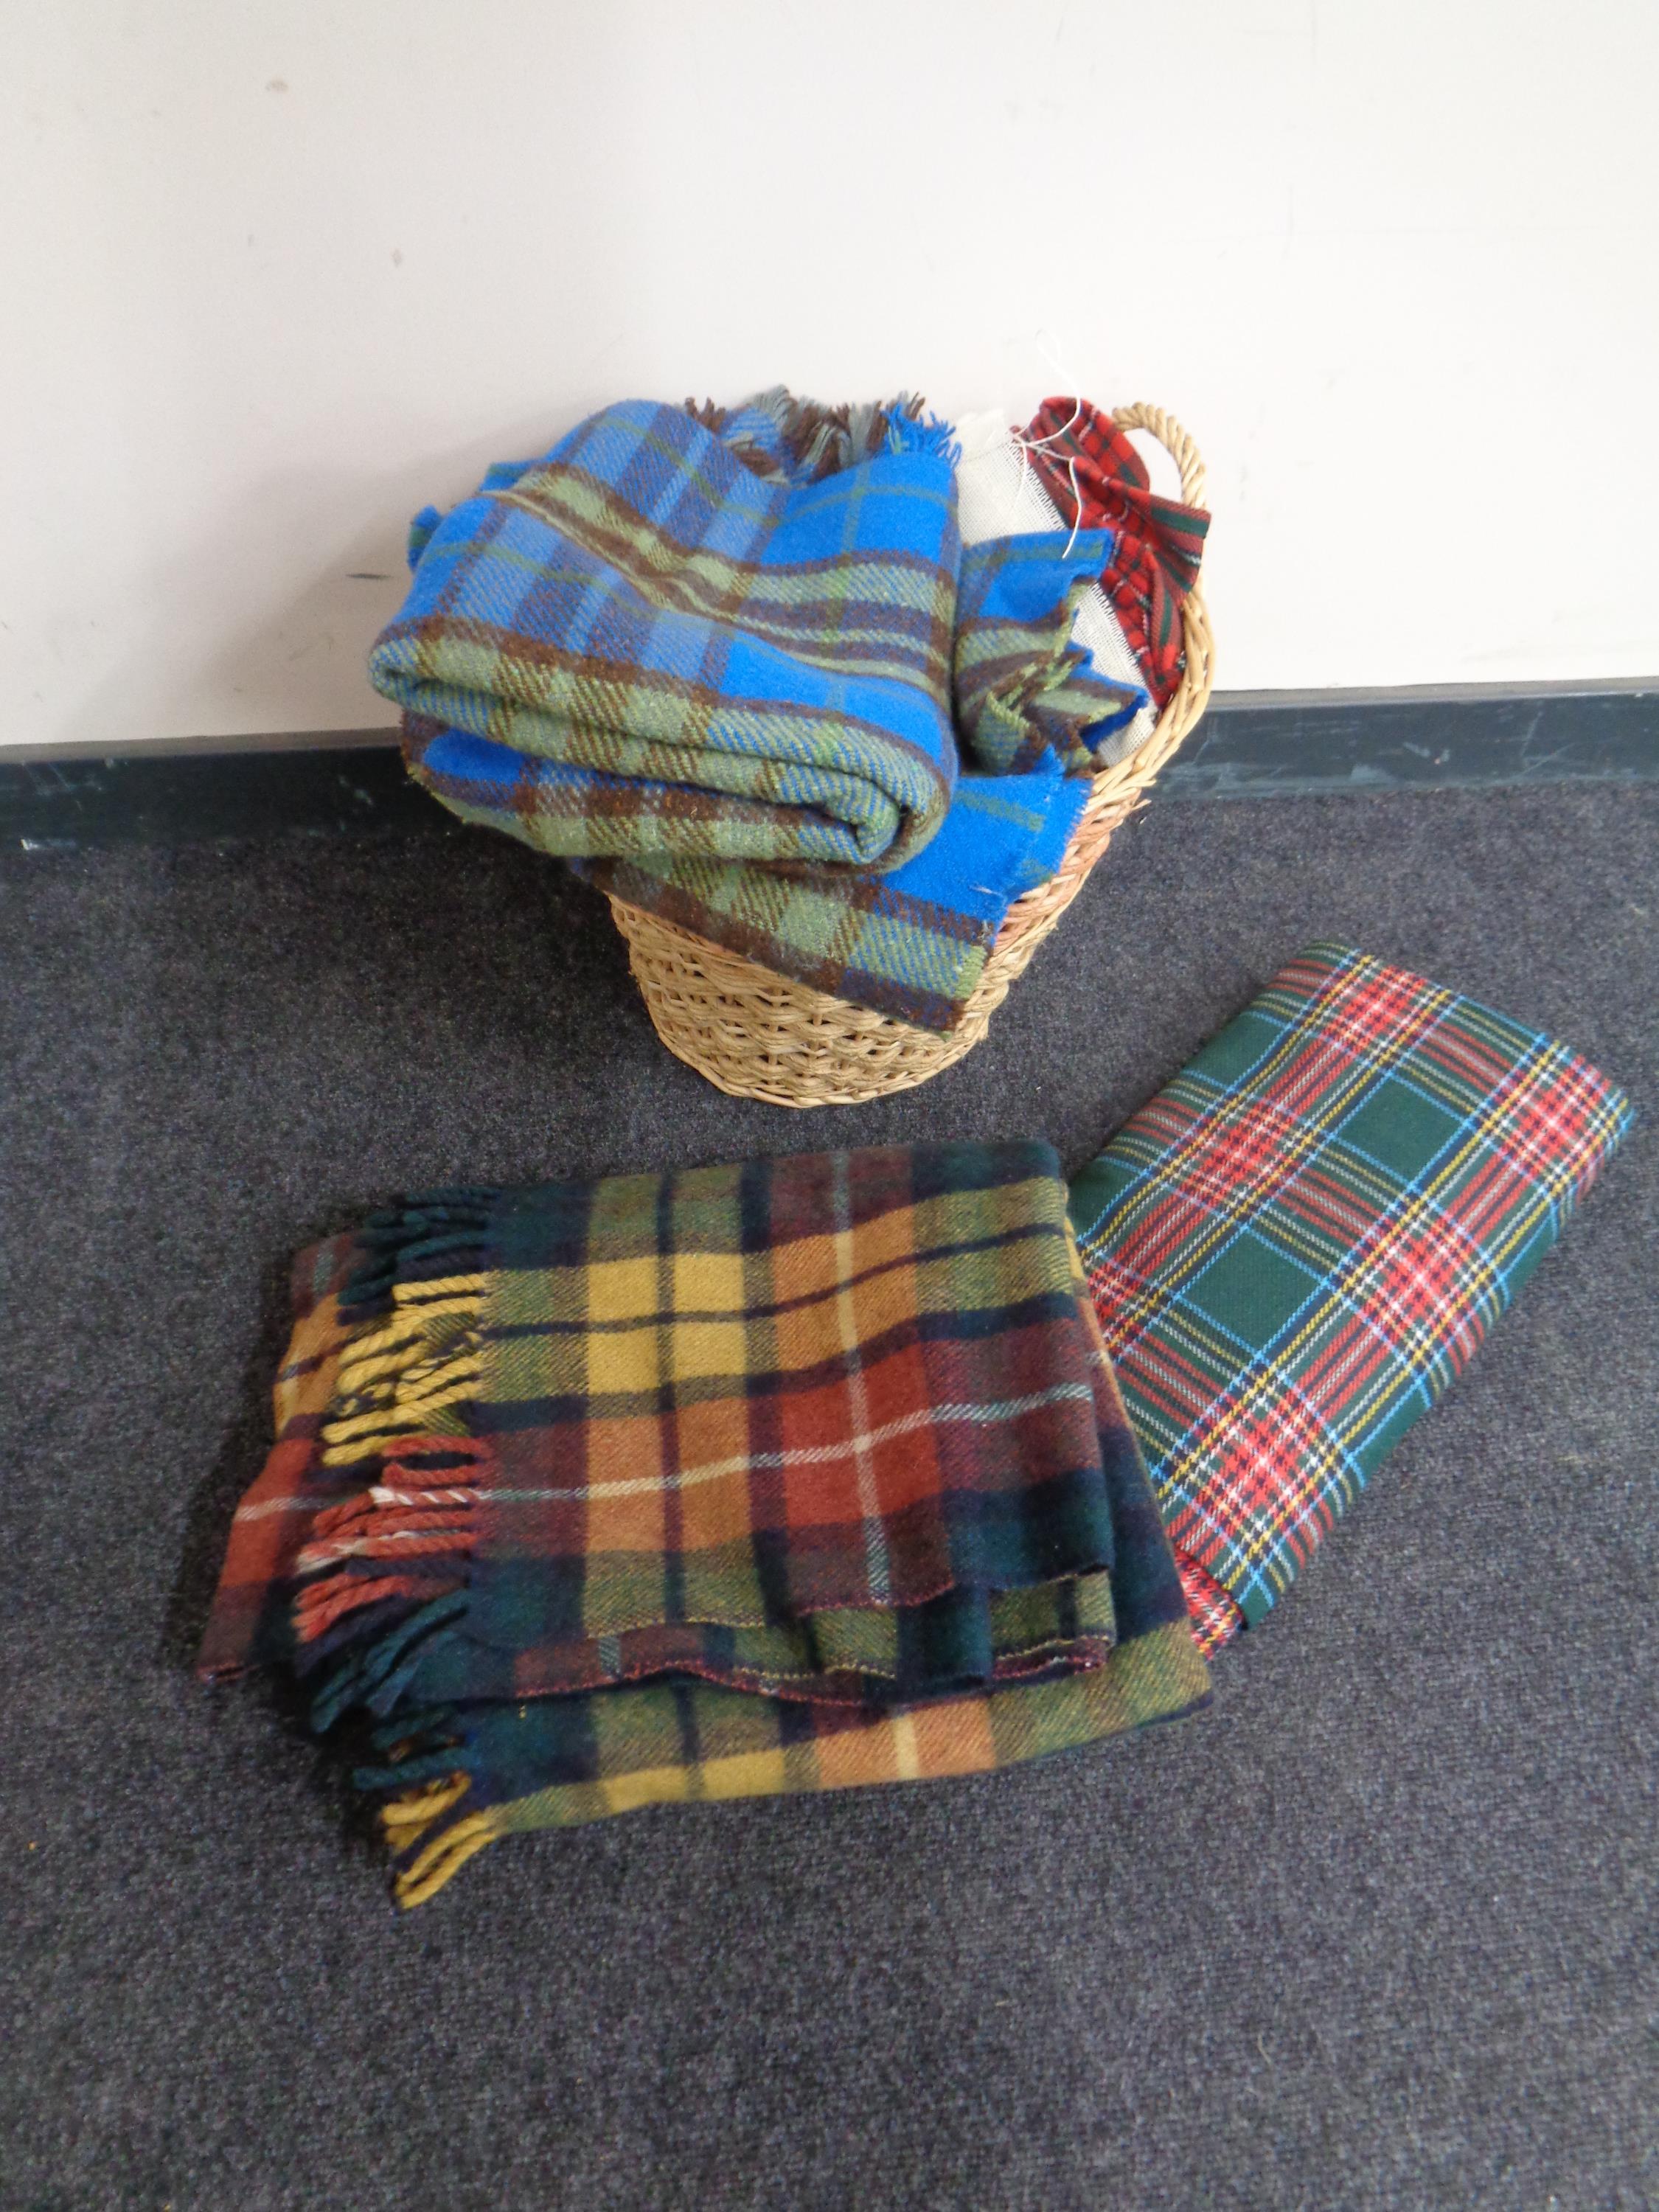 A wicker twin handled log basket containing a quantity of woolen tartan blankets